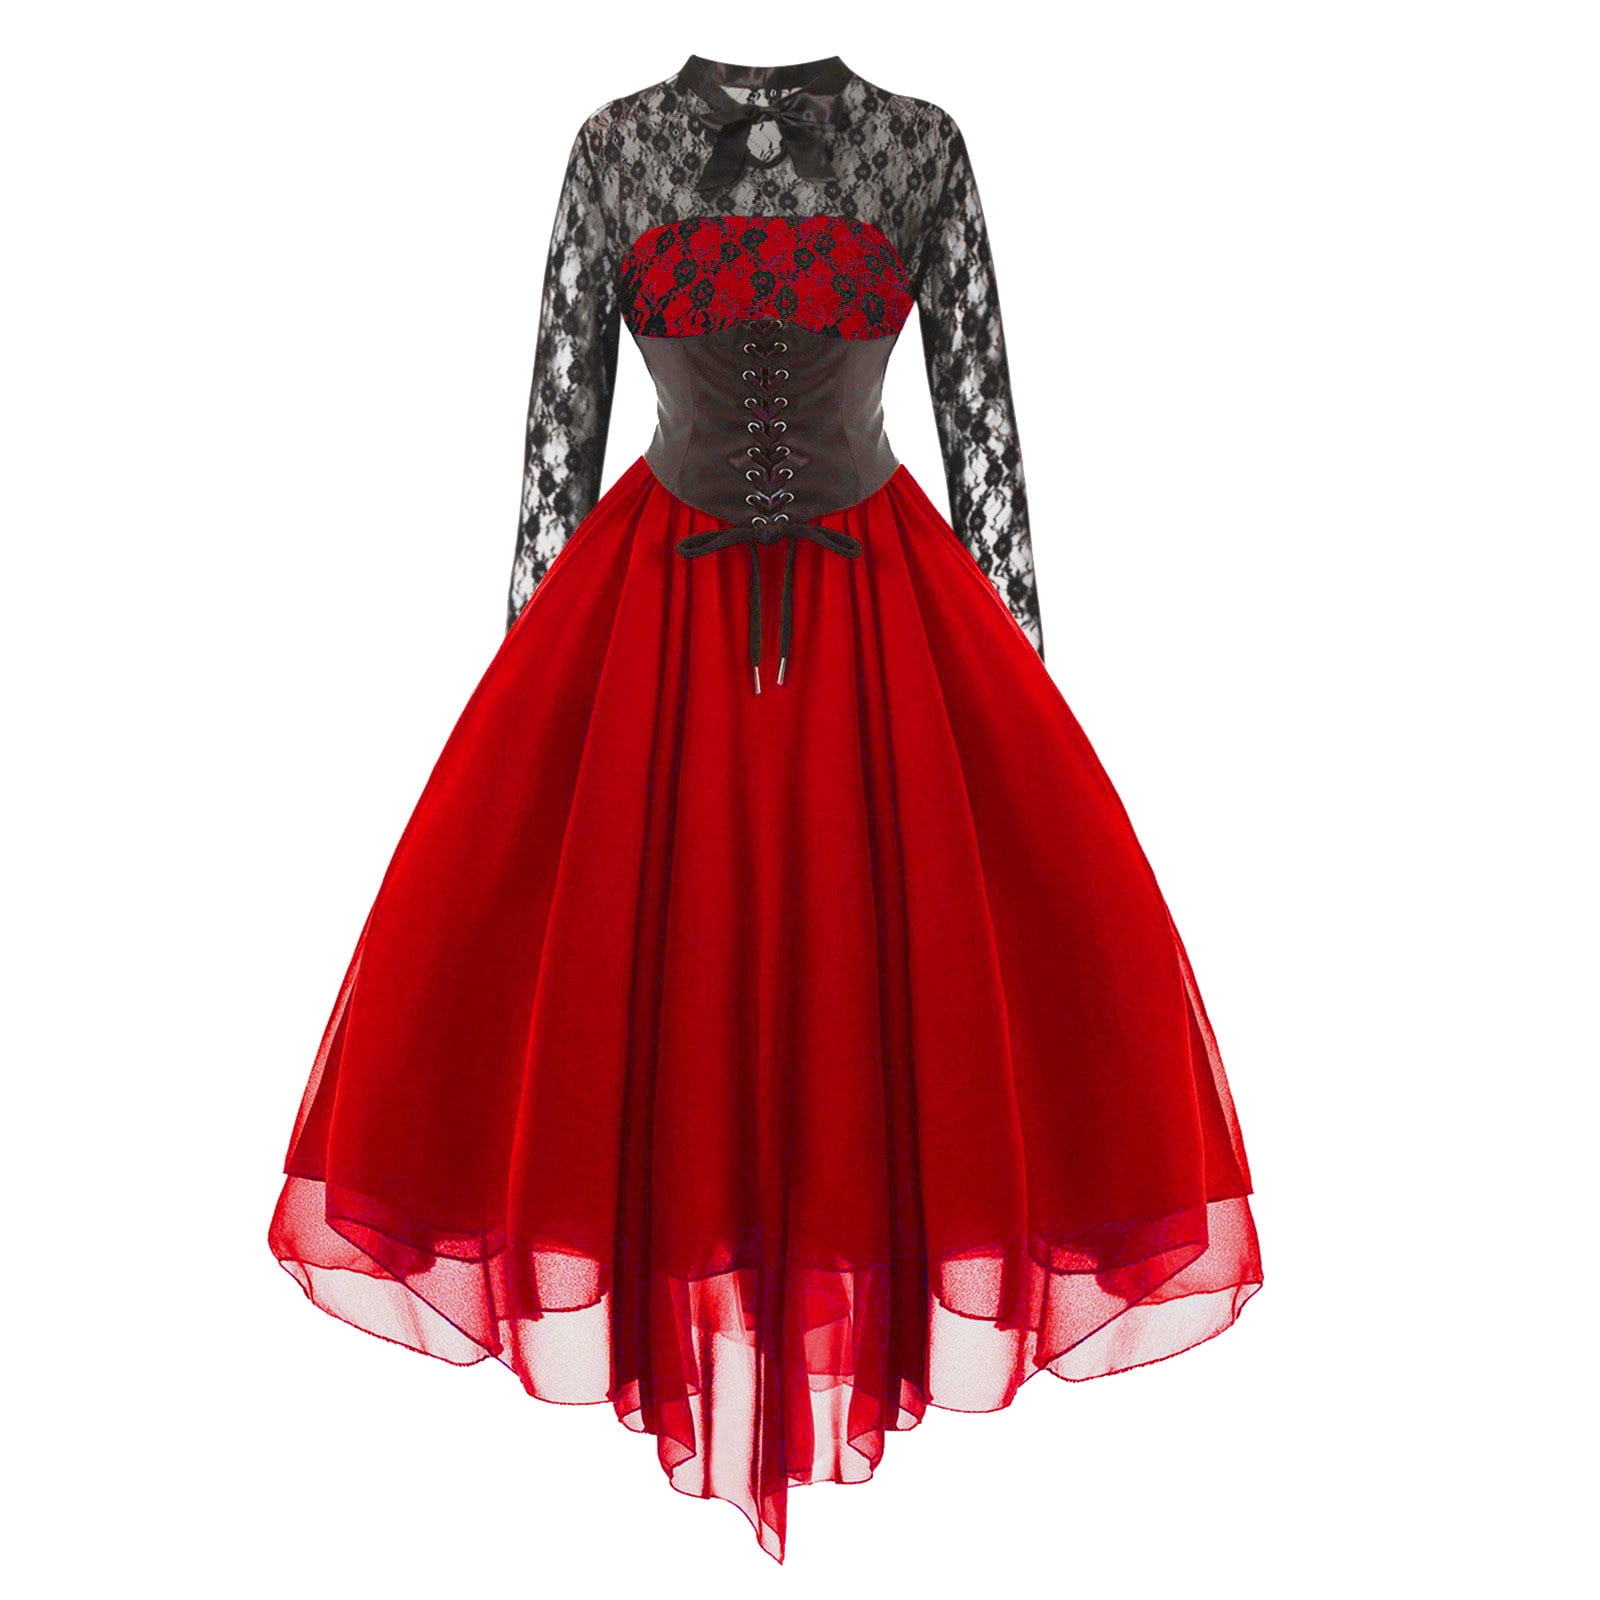 JGGSPWM Women's Vintage Victorian Steampunk Corset Dress Costume Red L